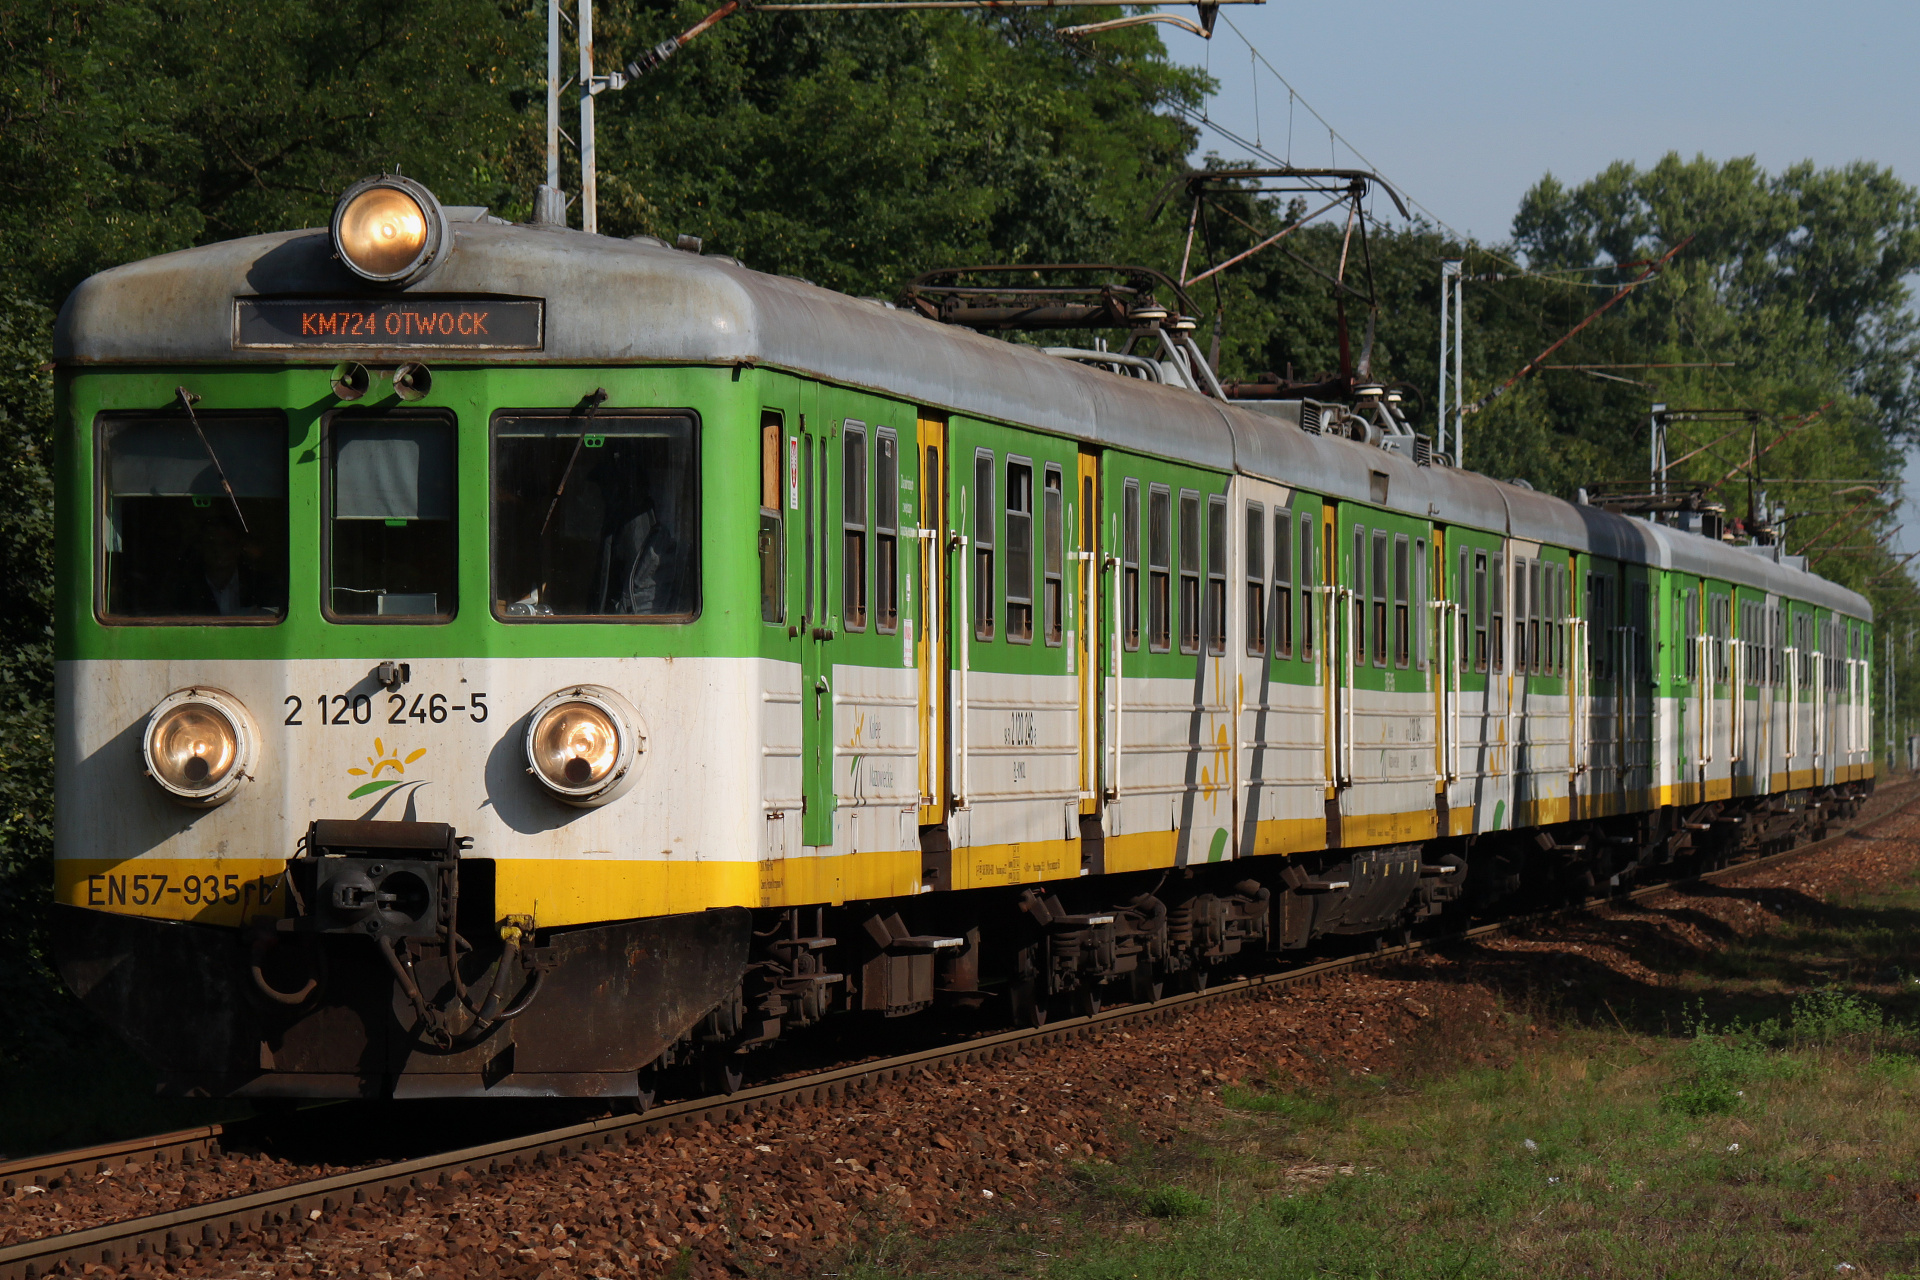 EN57-935 (Vehicles » Trains and Locomotives » Pafawag 5B/6B EN57 and revisions)